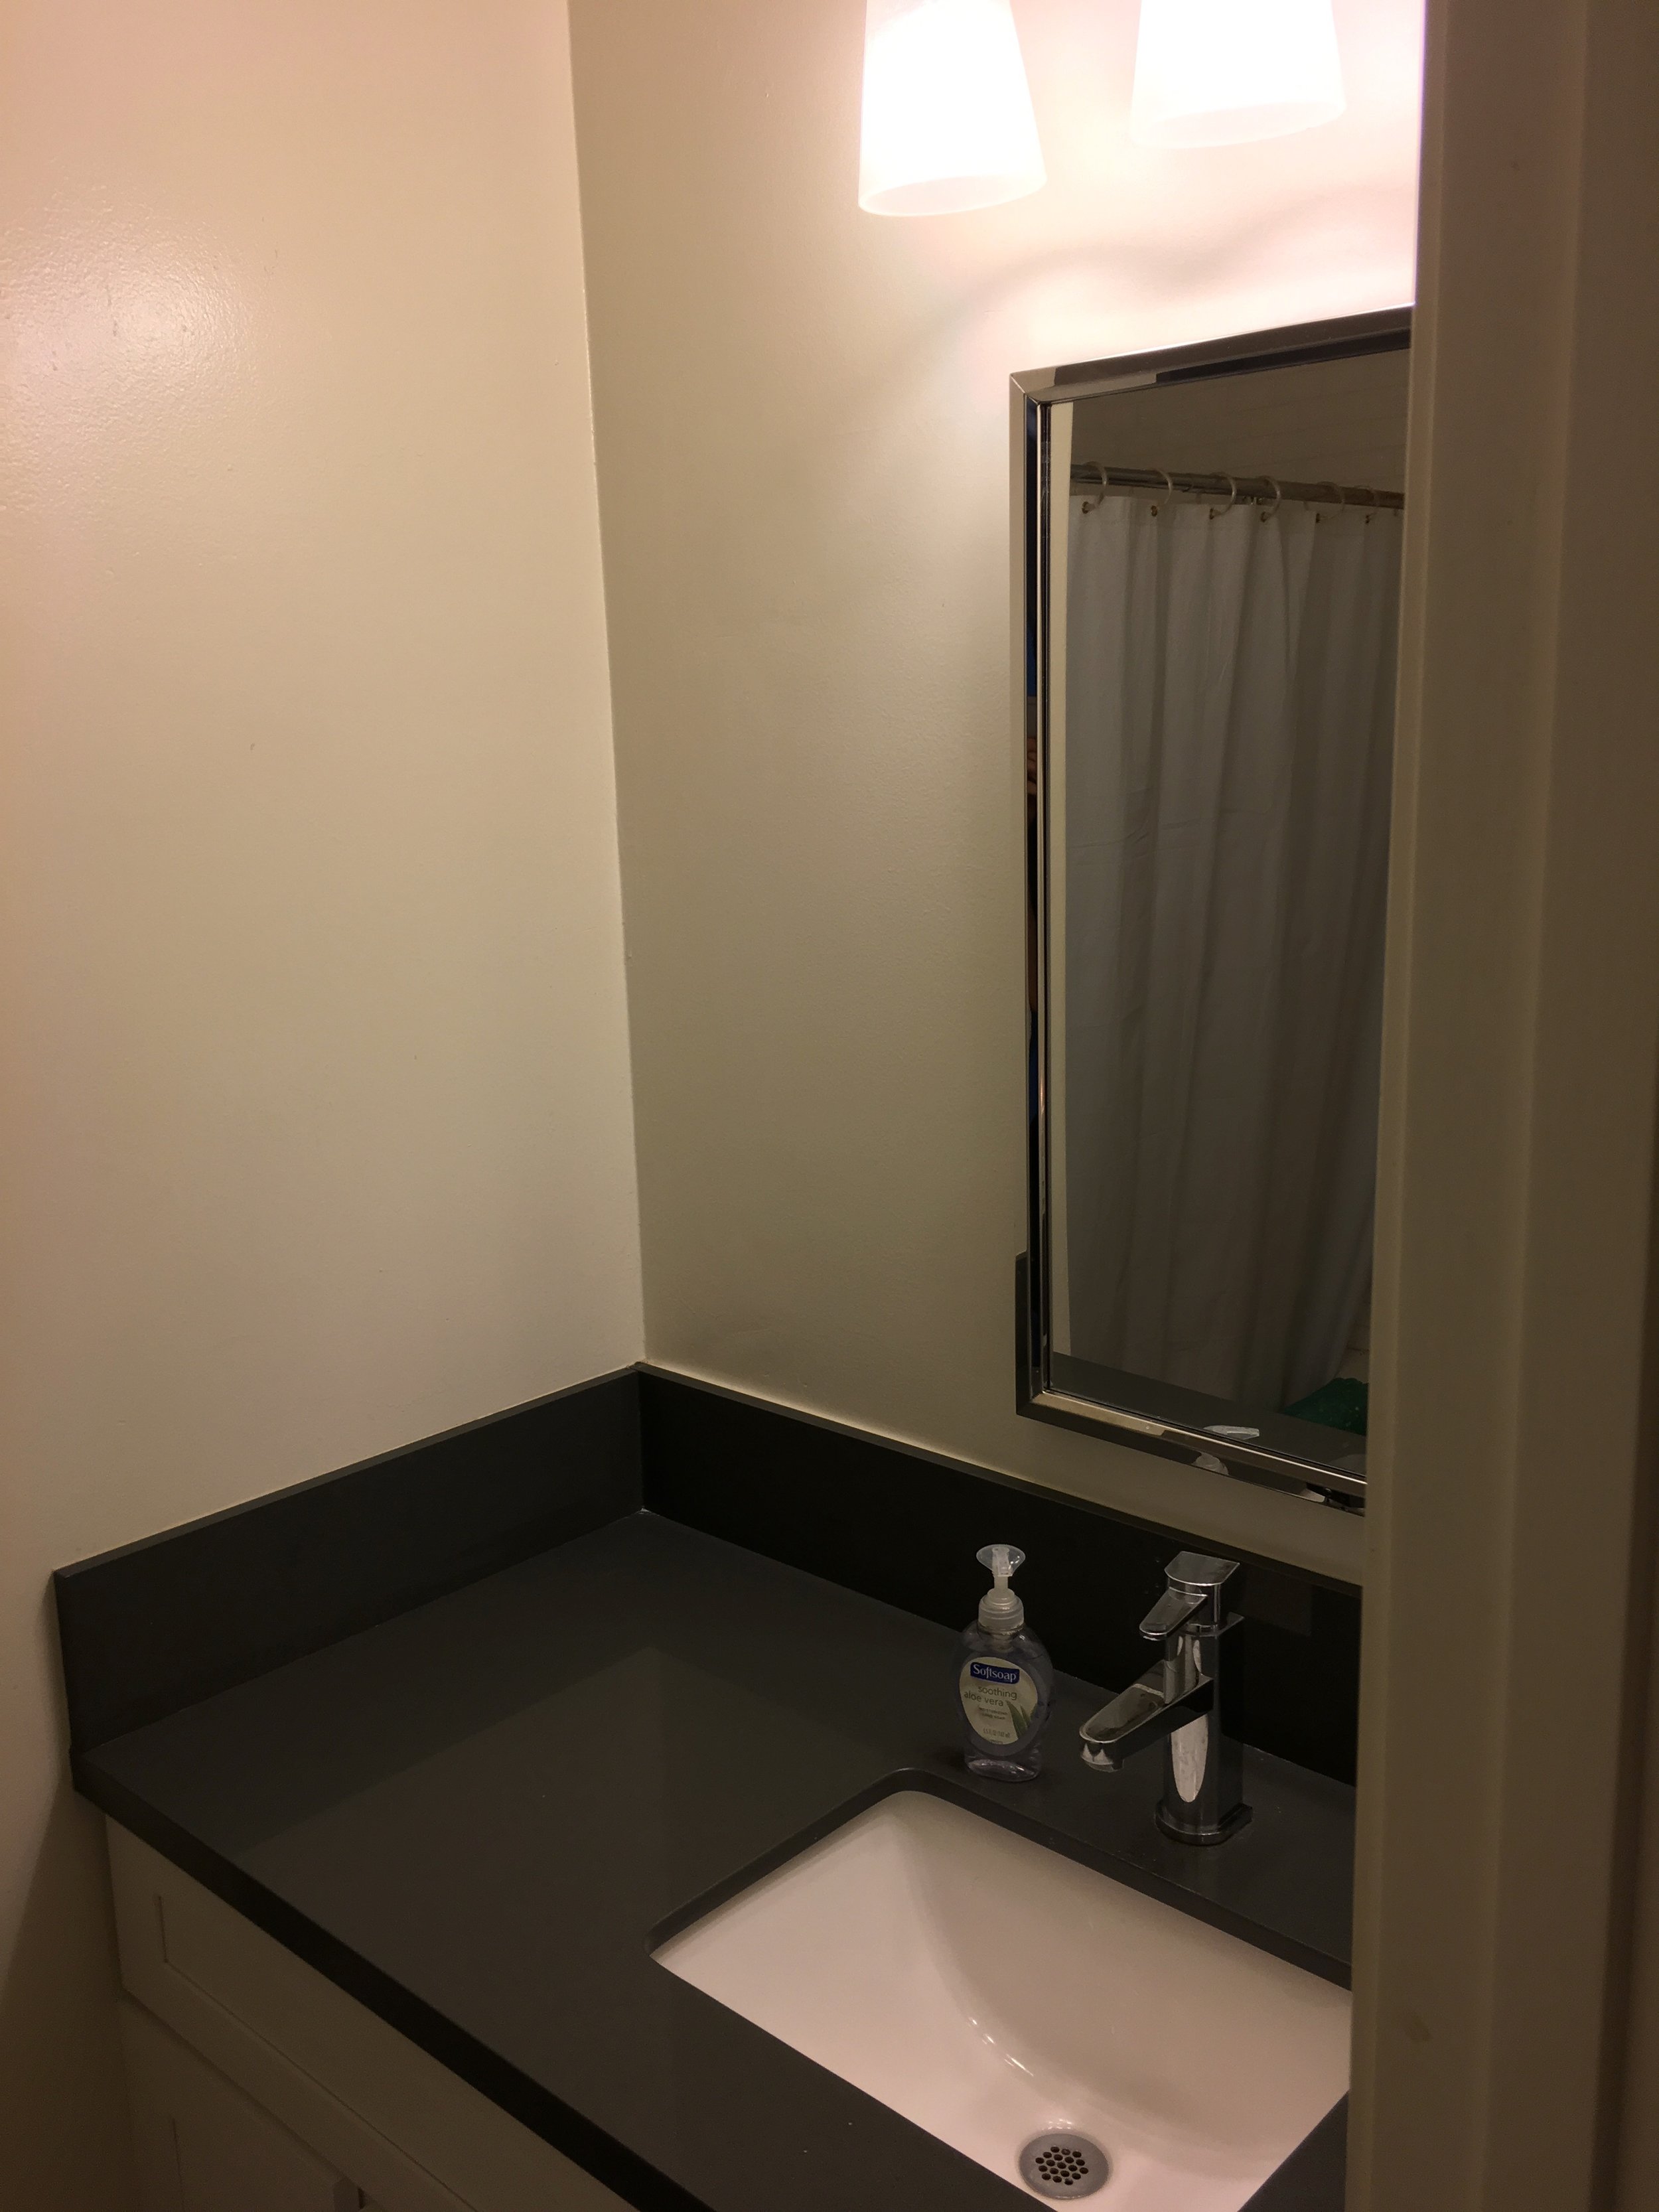 Each apartment has two full bathrooms.